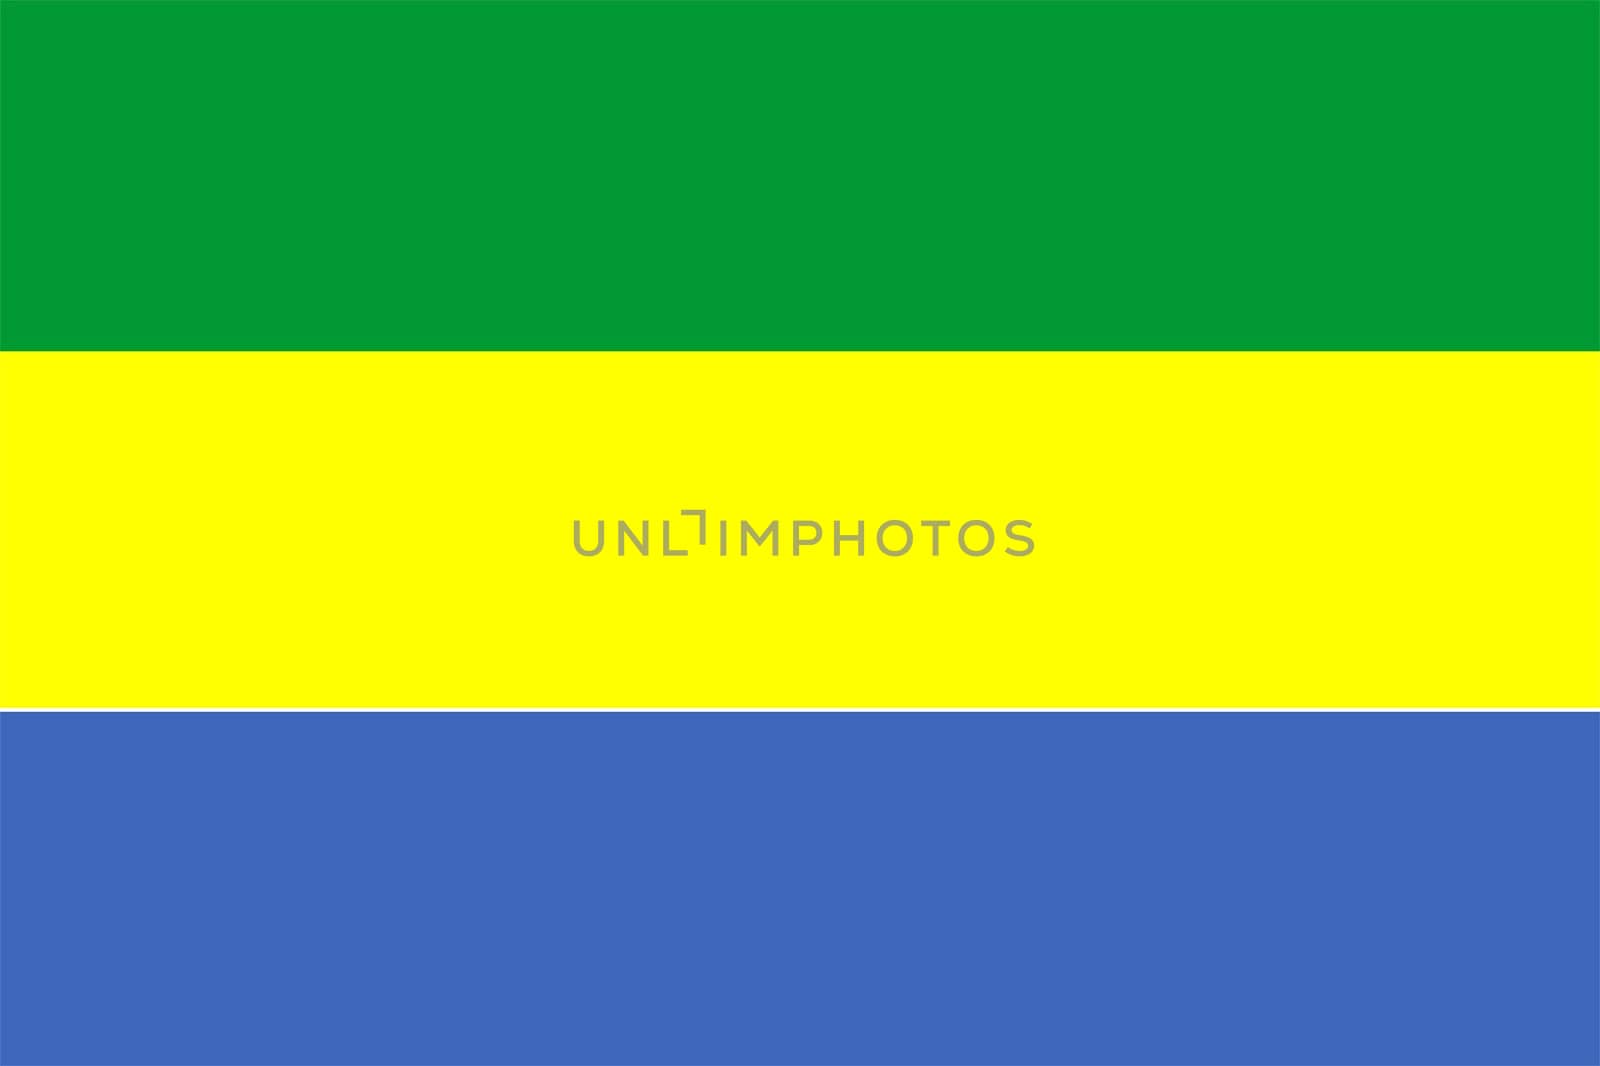 2D illustration of the flag of Gabon vector